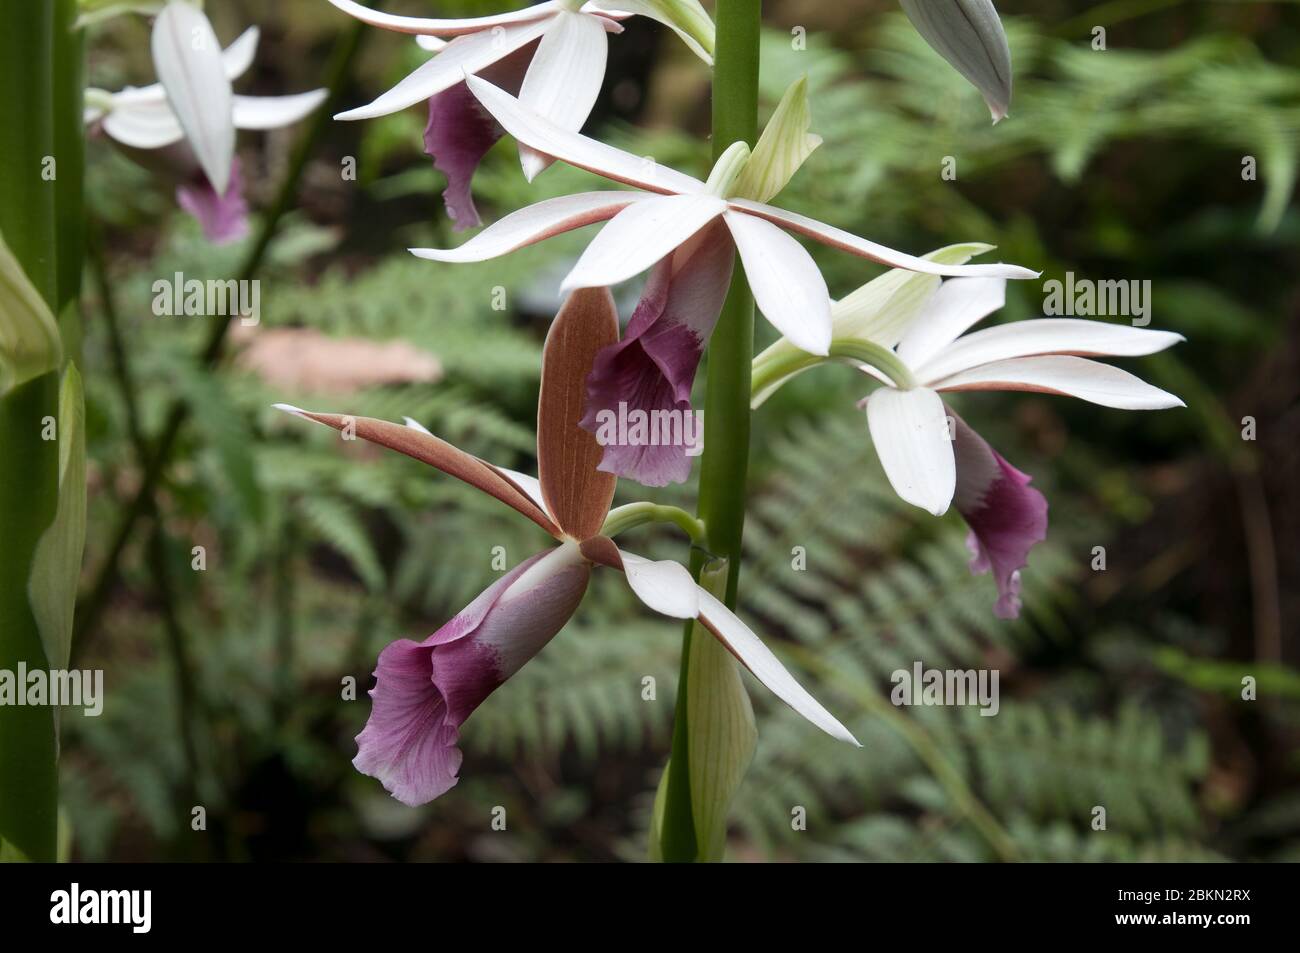 Sydney Australia, flowers of a phaius tankervilleae var. australis or lesser swamp orchid Stock Photo